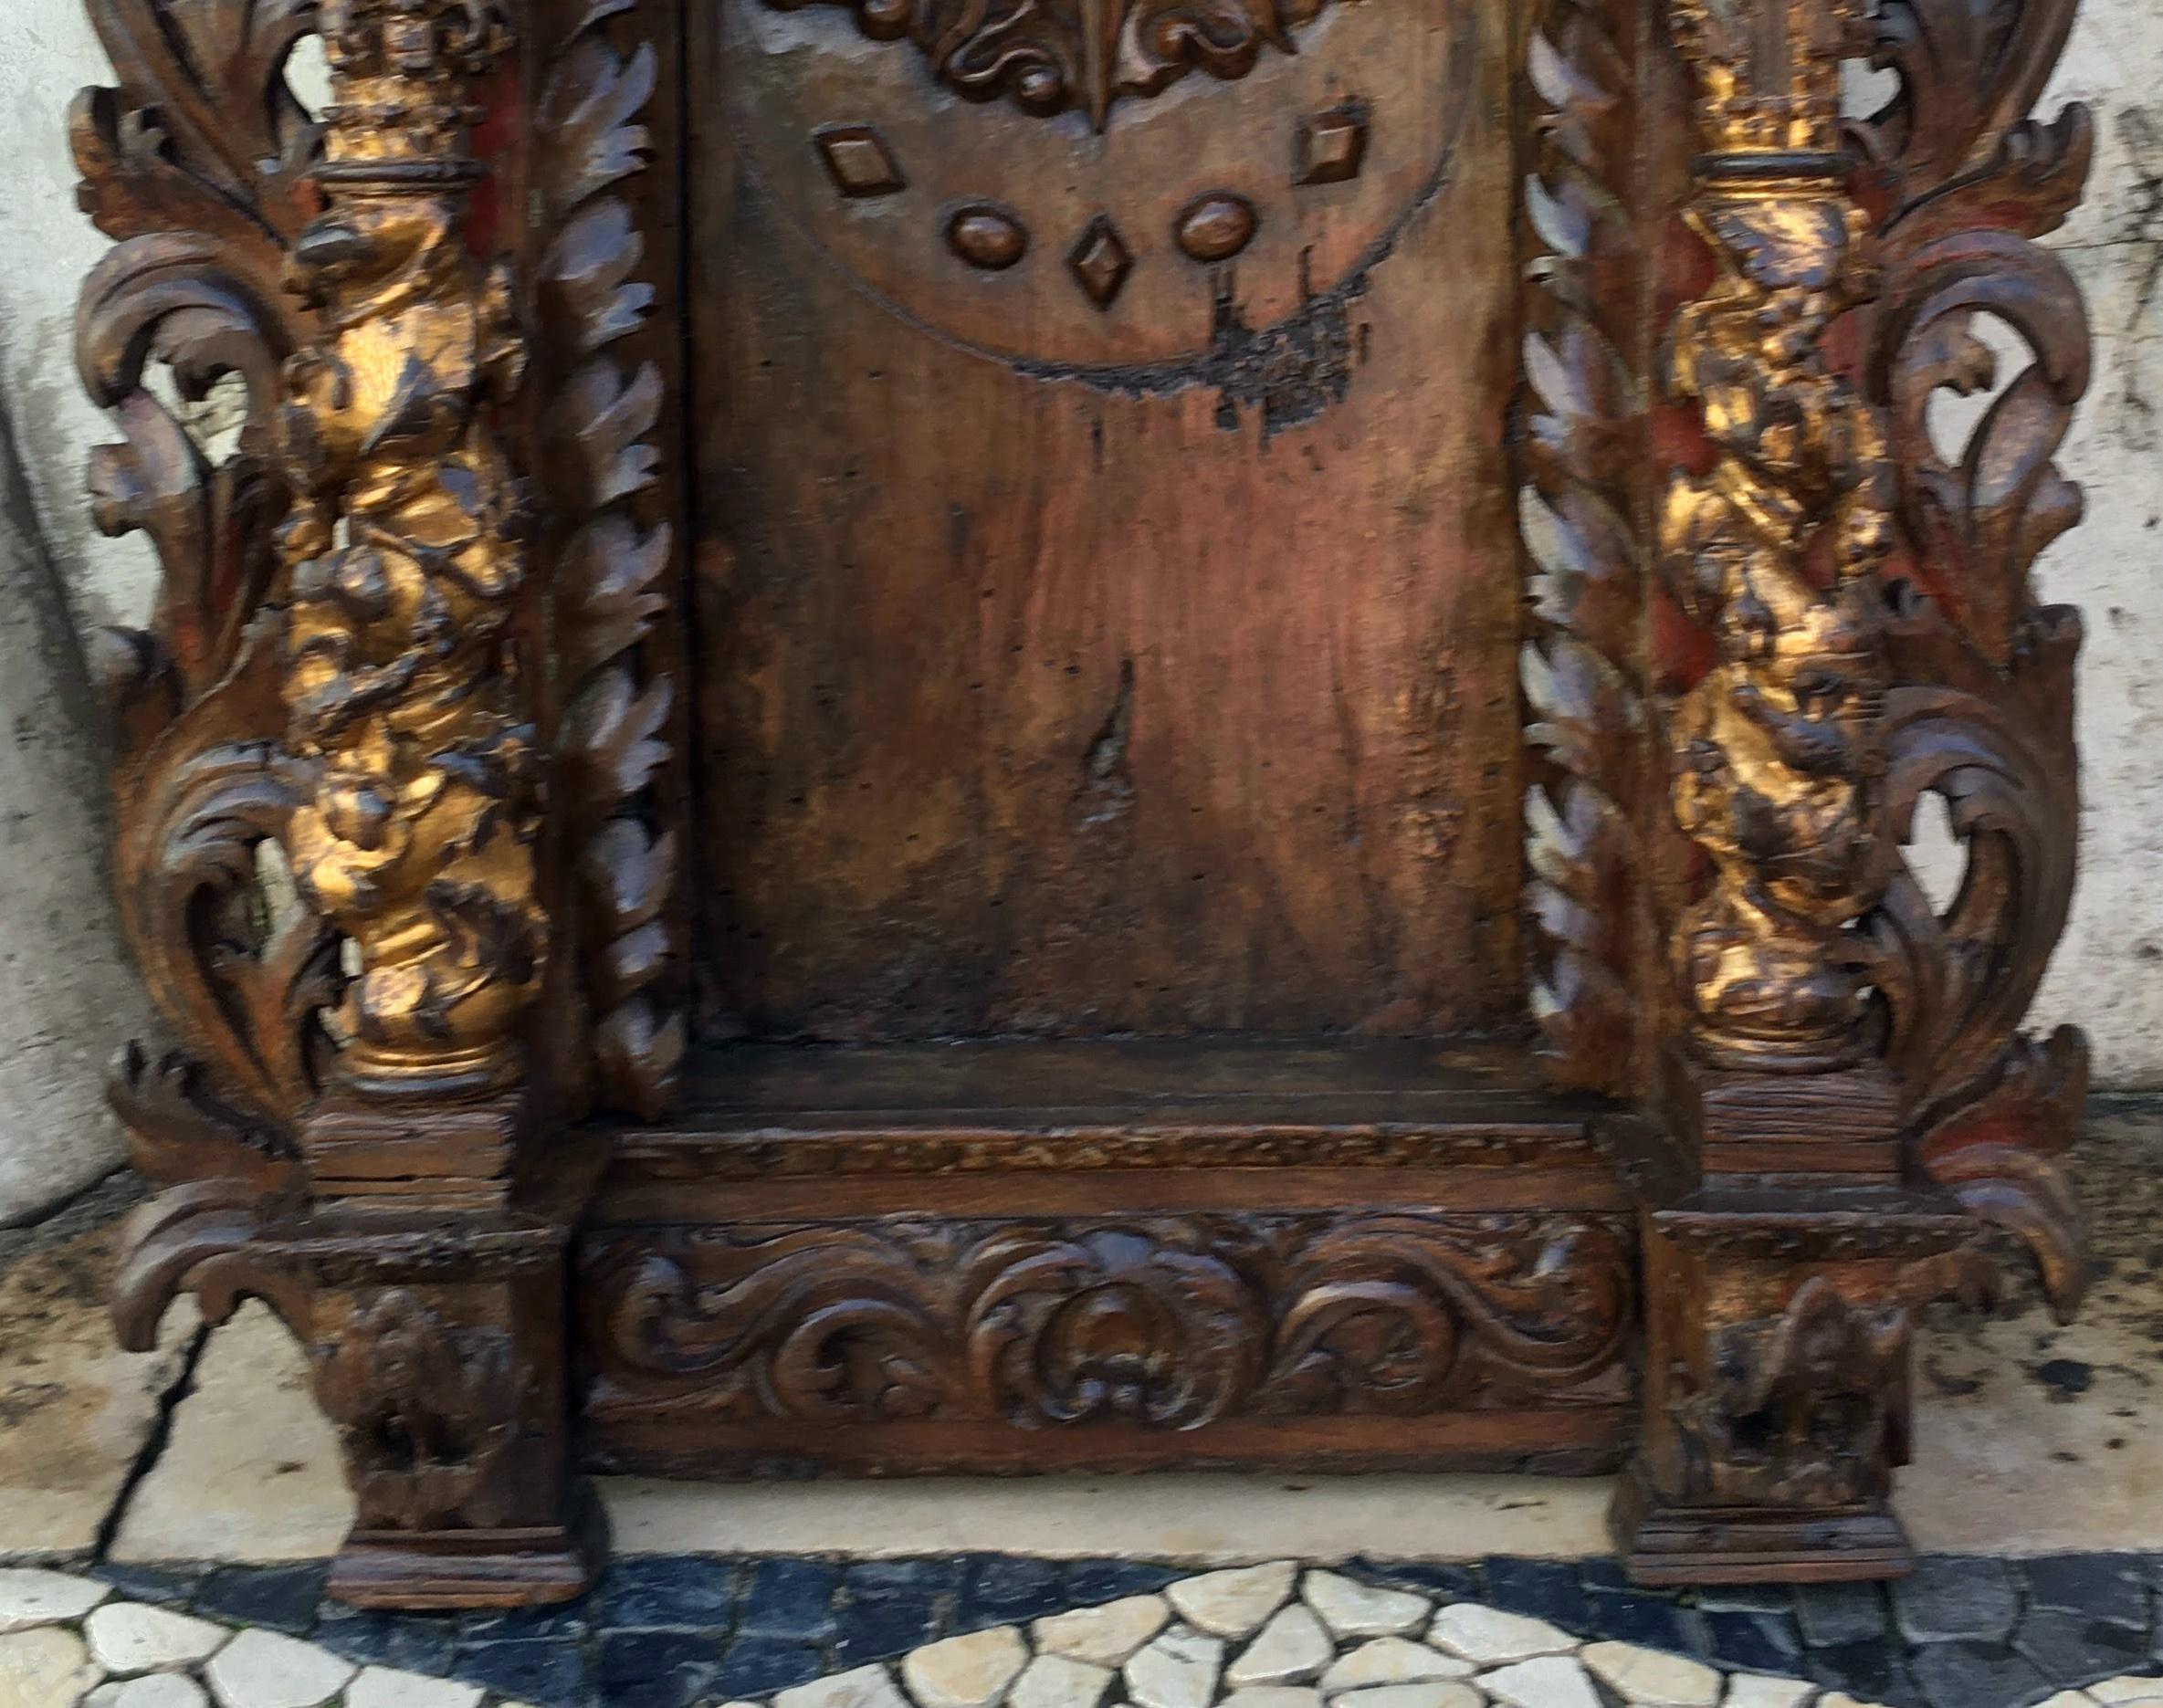 Portuguese, 18th Century Carved Wood Oratory (Rokoko)